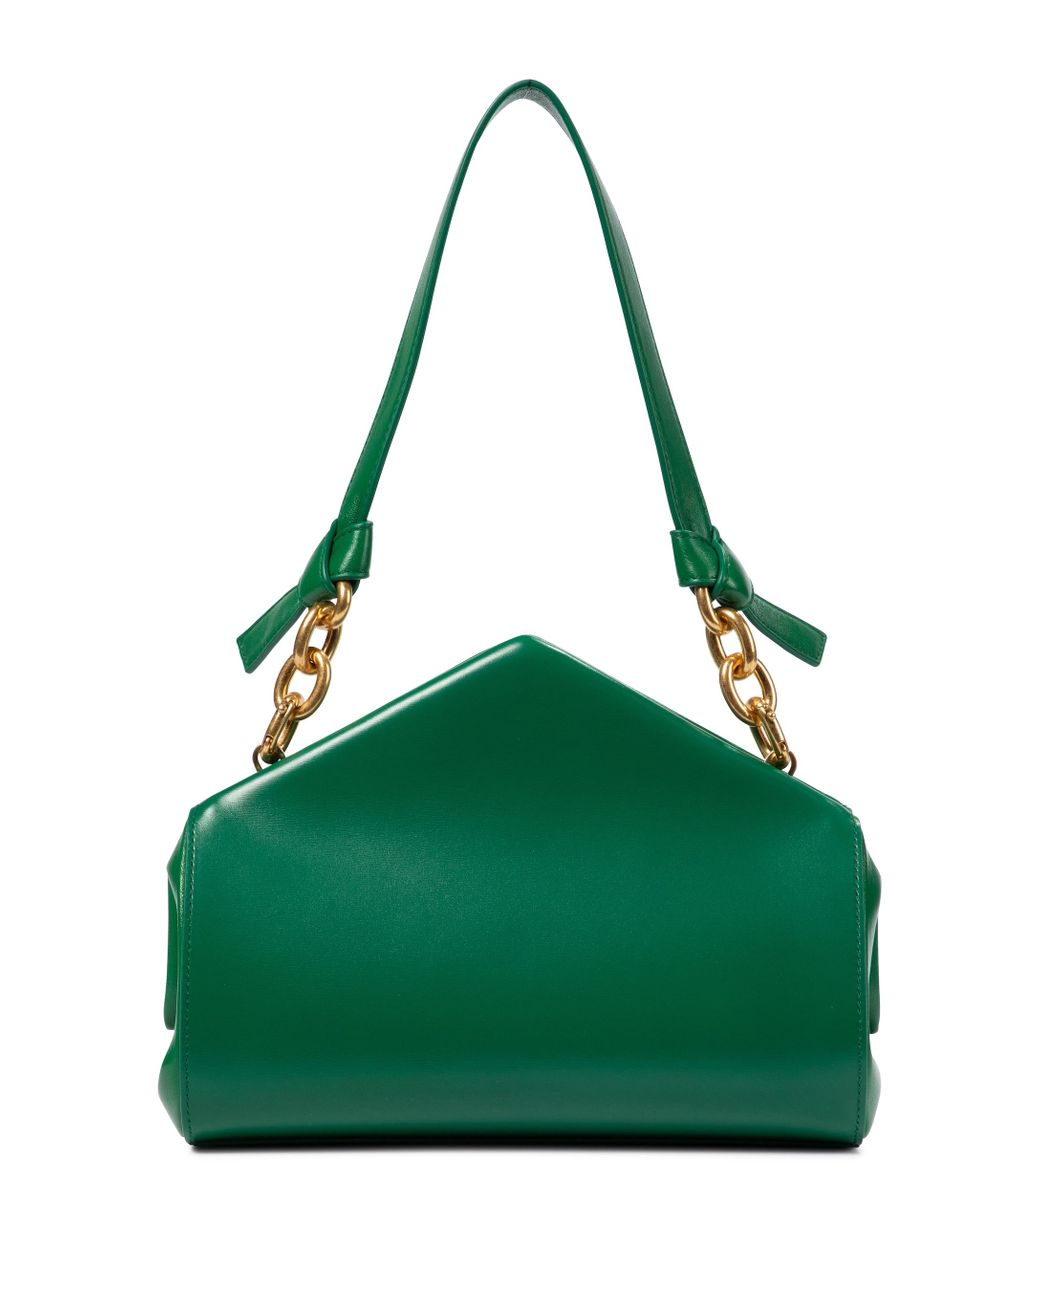 Bottega Veneta Leather Shoulder Bag in Green - Lyst